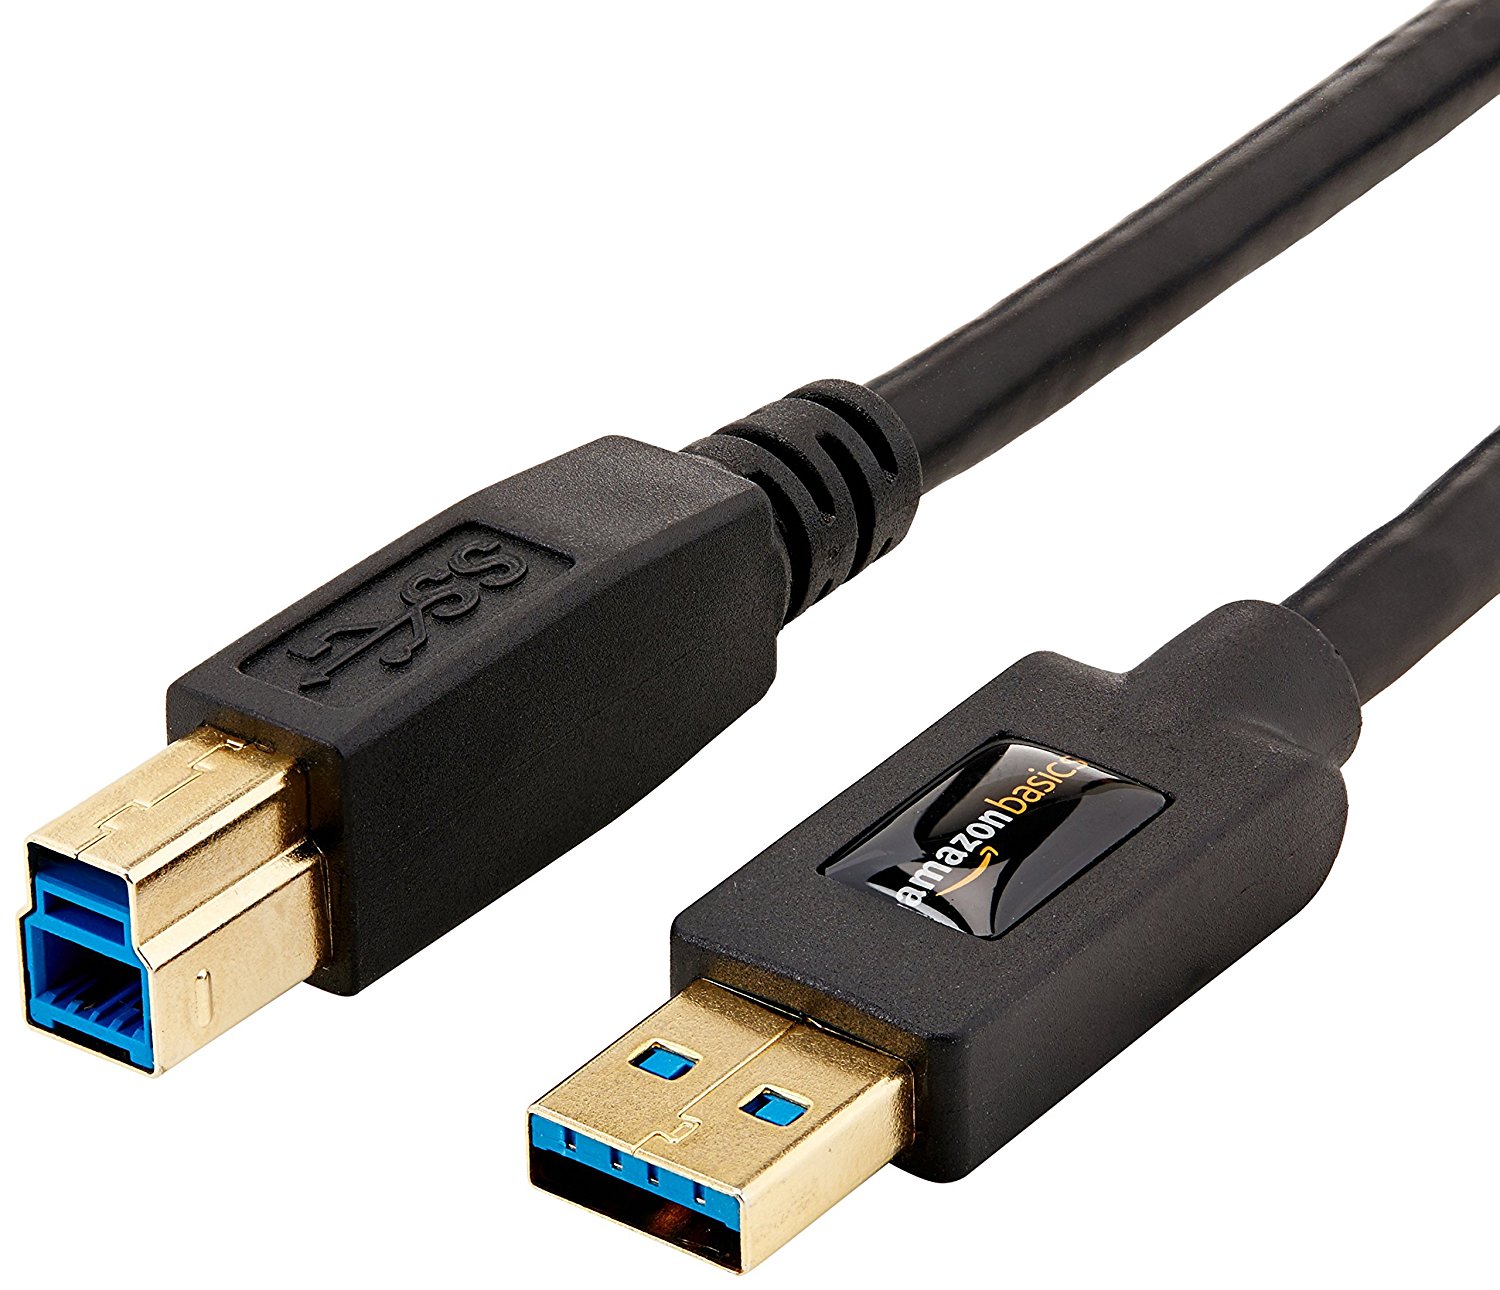 Amazon.com: AmazonBasics USB 3.0 Cable - A-Male to B-Male - 6 Feet ...